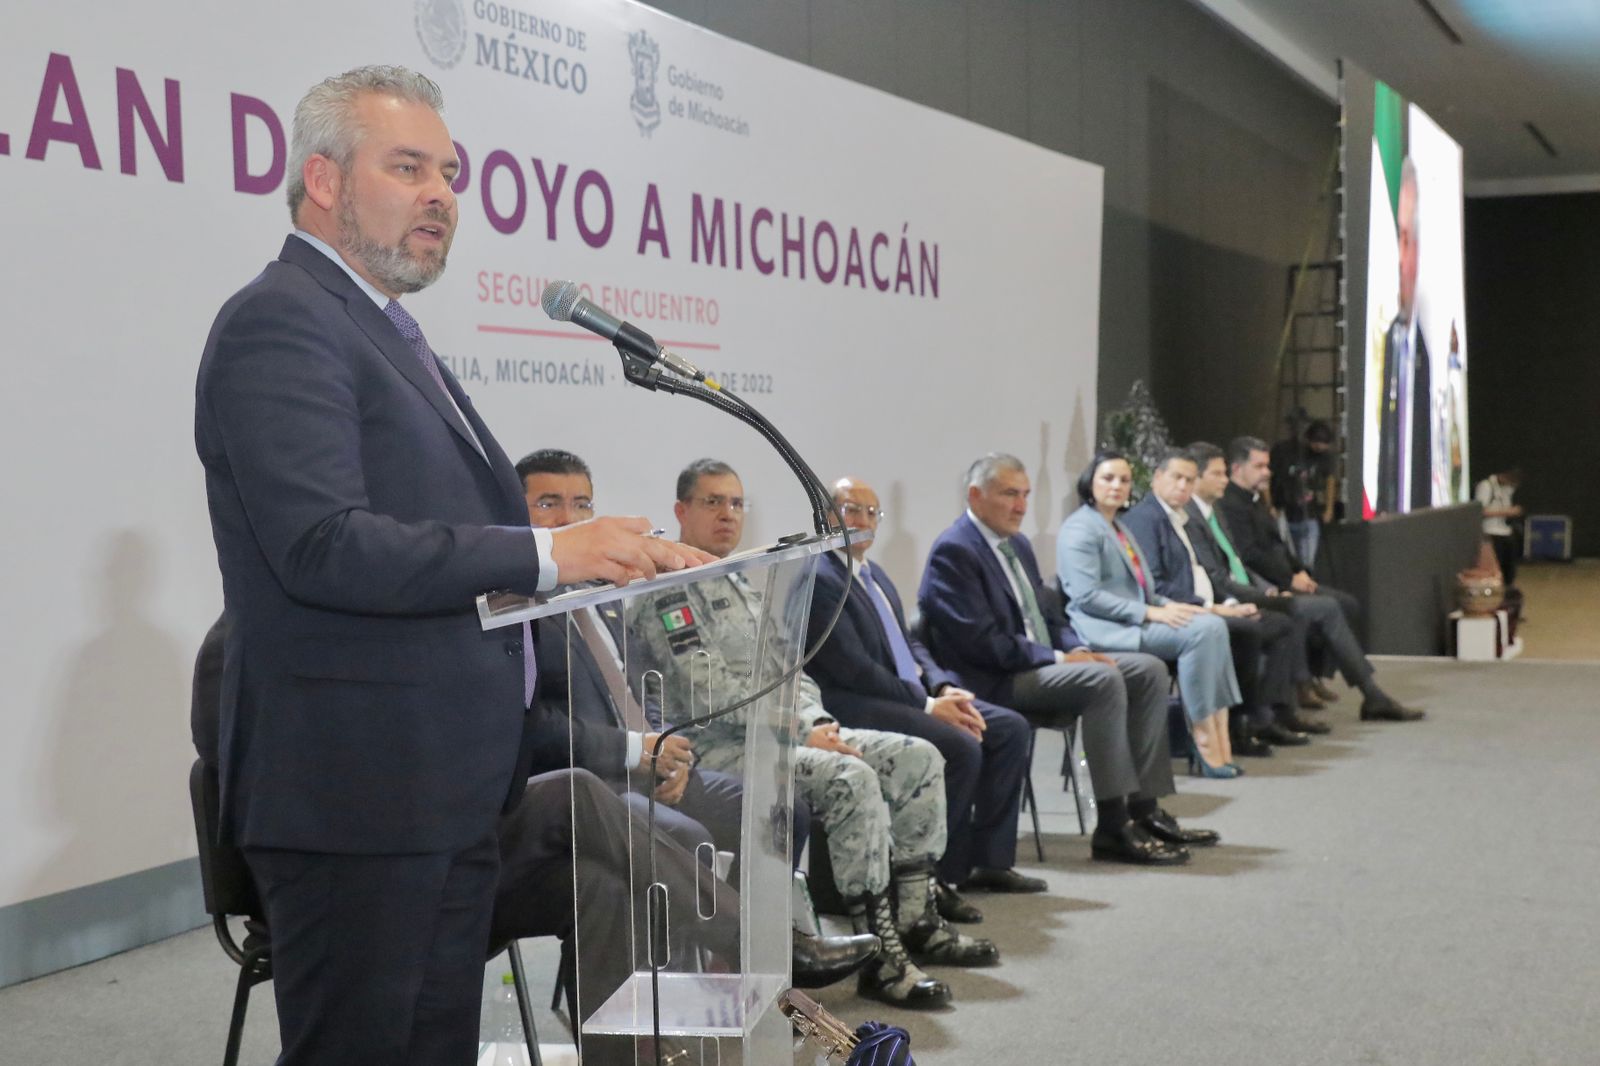 *Gobierno de México ratifica respaldo a Michoacán; el Plan de Apoyo continúa*